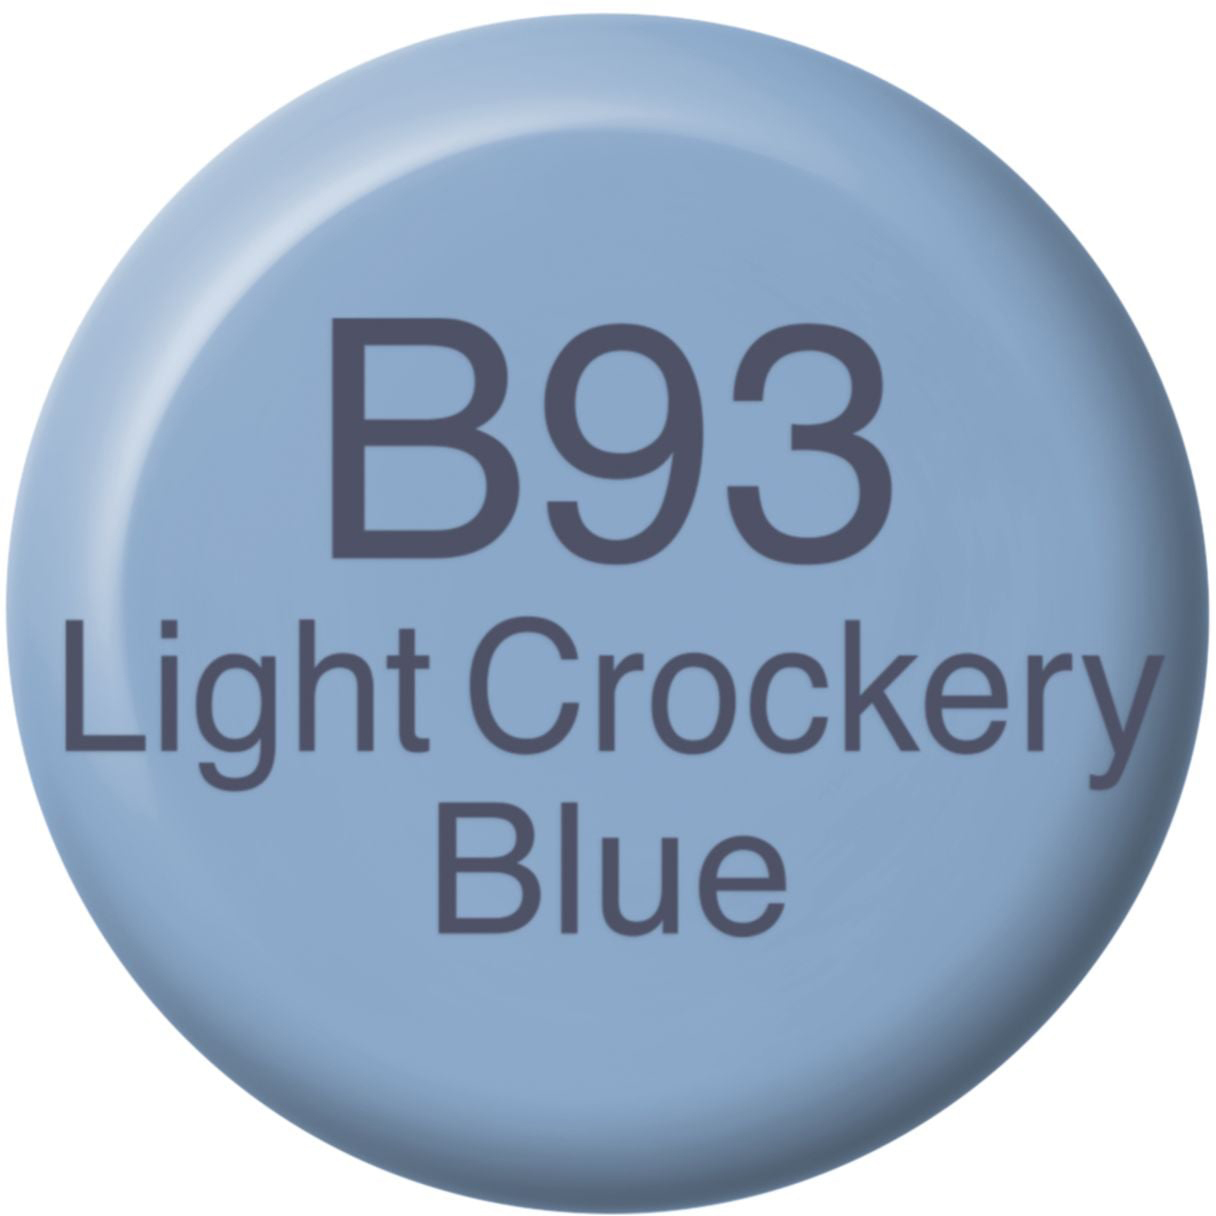 COPIC Ink Refill 21076155 B93 - Light Crockery Blue